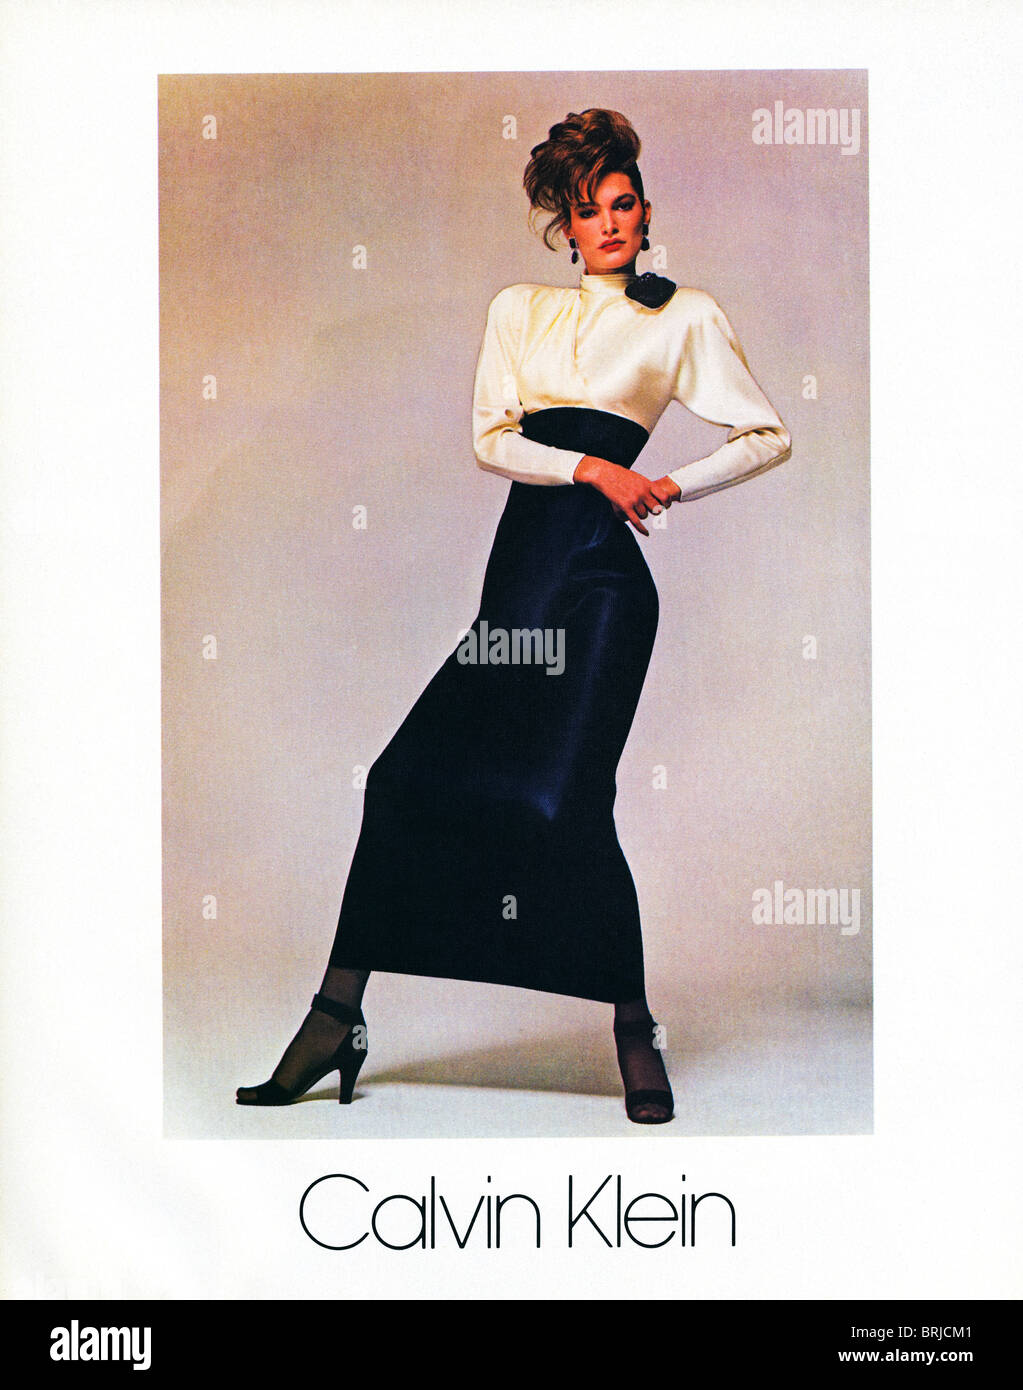 Classic calvin klein advertisement - Advert for fashion designer Calvin Klein in American fashion magazine circa 1983 Stock Photo